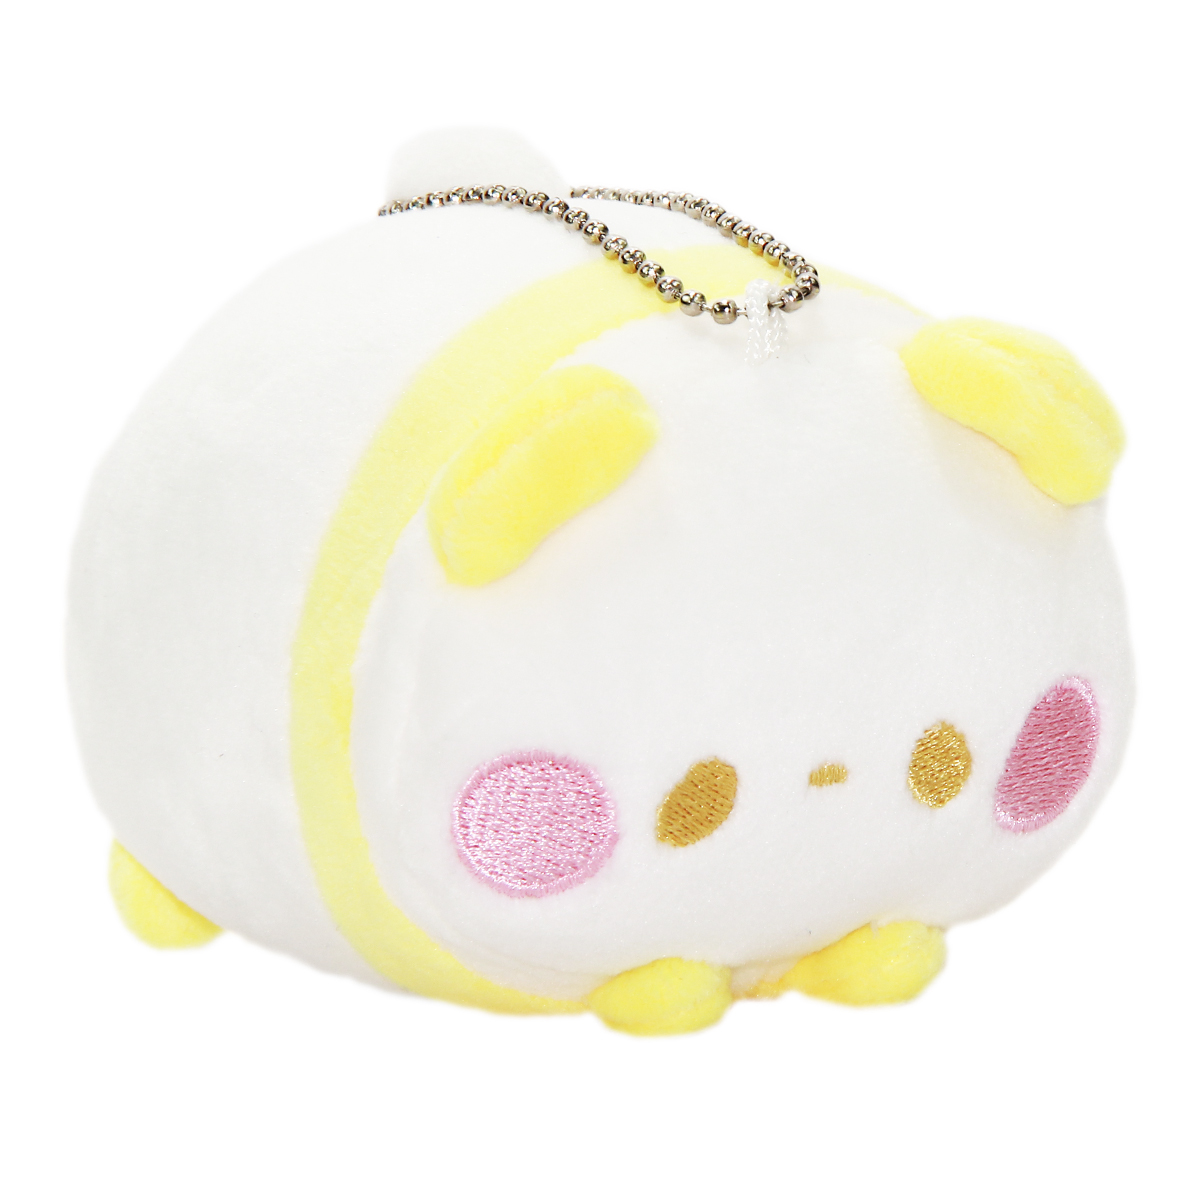 Super Soft Mochii Cute Panda Plush Japanese Squishy Plushie Toy Kawaii Bear Yellow White